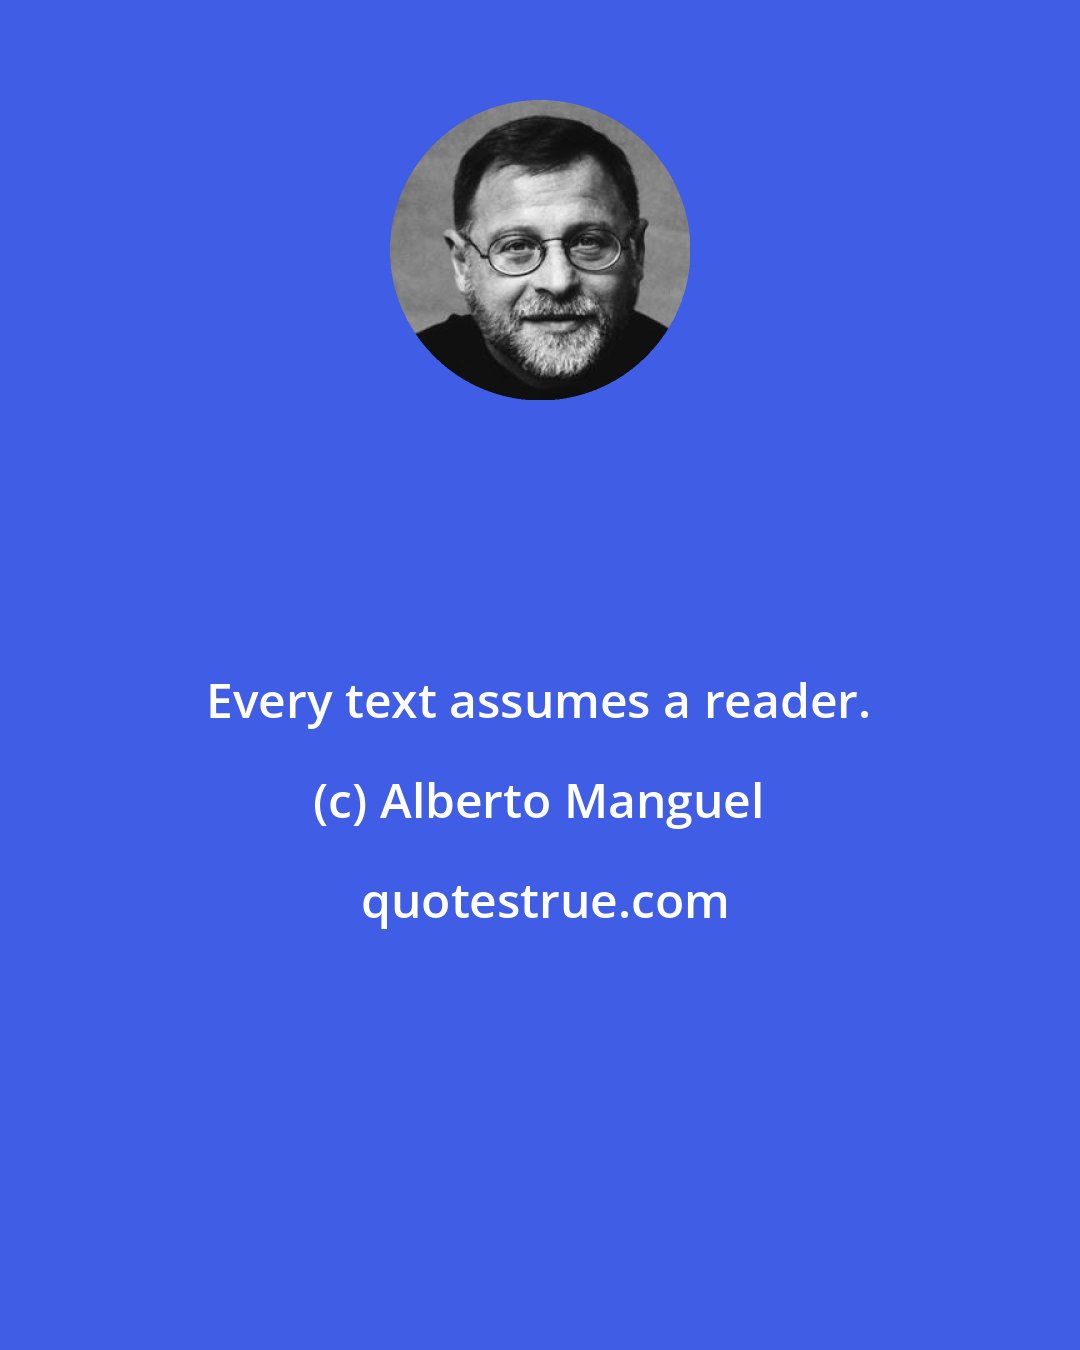 Alberto Manguel: Every text assumes a reader.